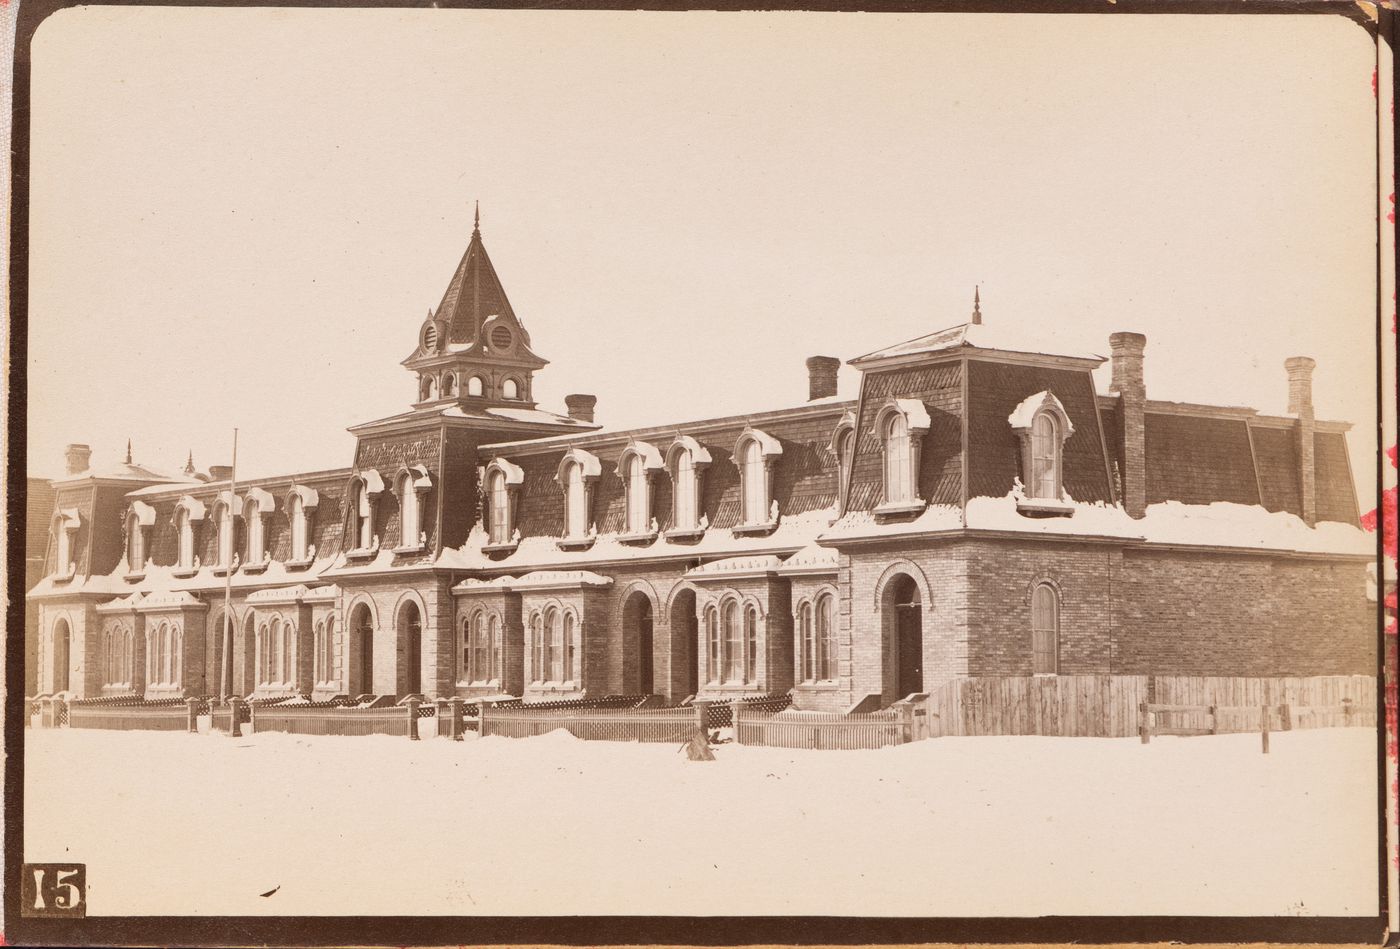 View of the principal façade of O'Brien's Terrace (now demolished), Winnipeg, Manitoba, Canada